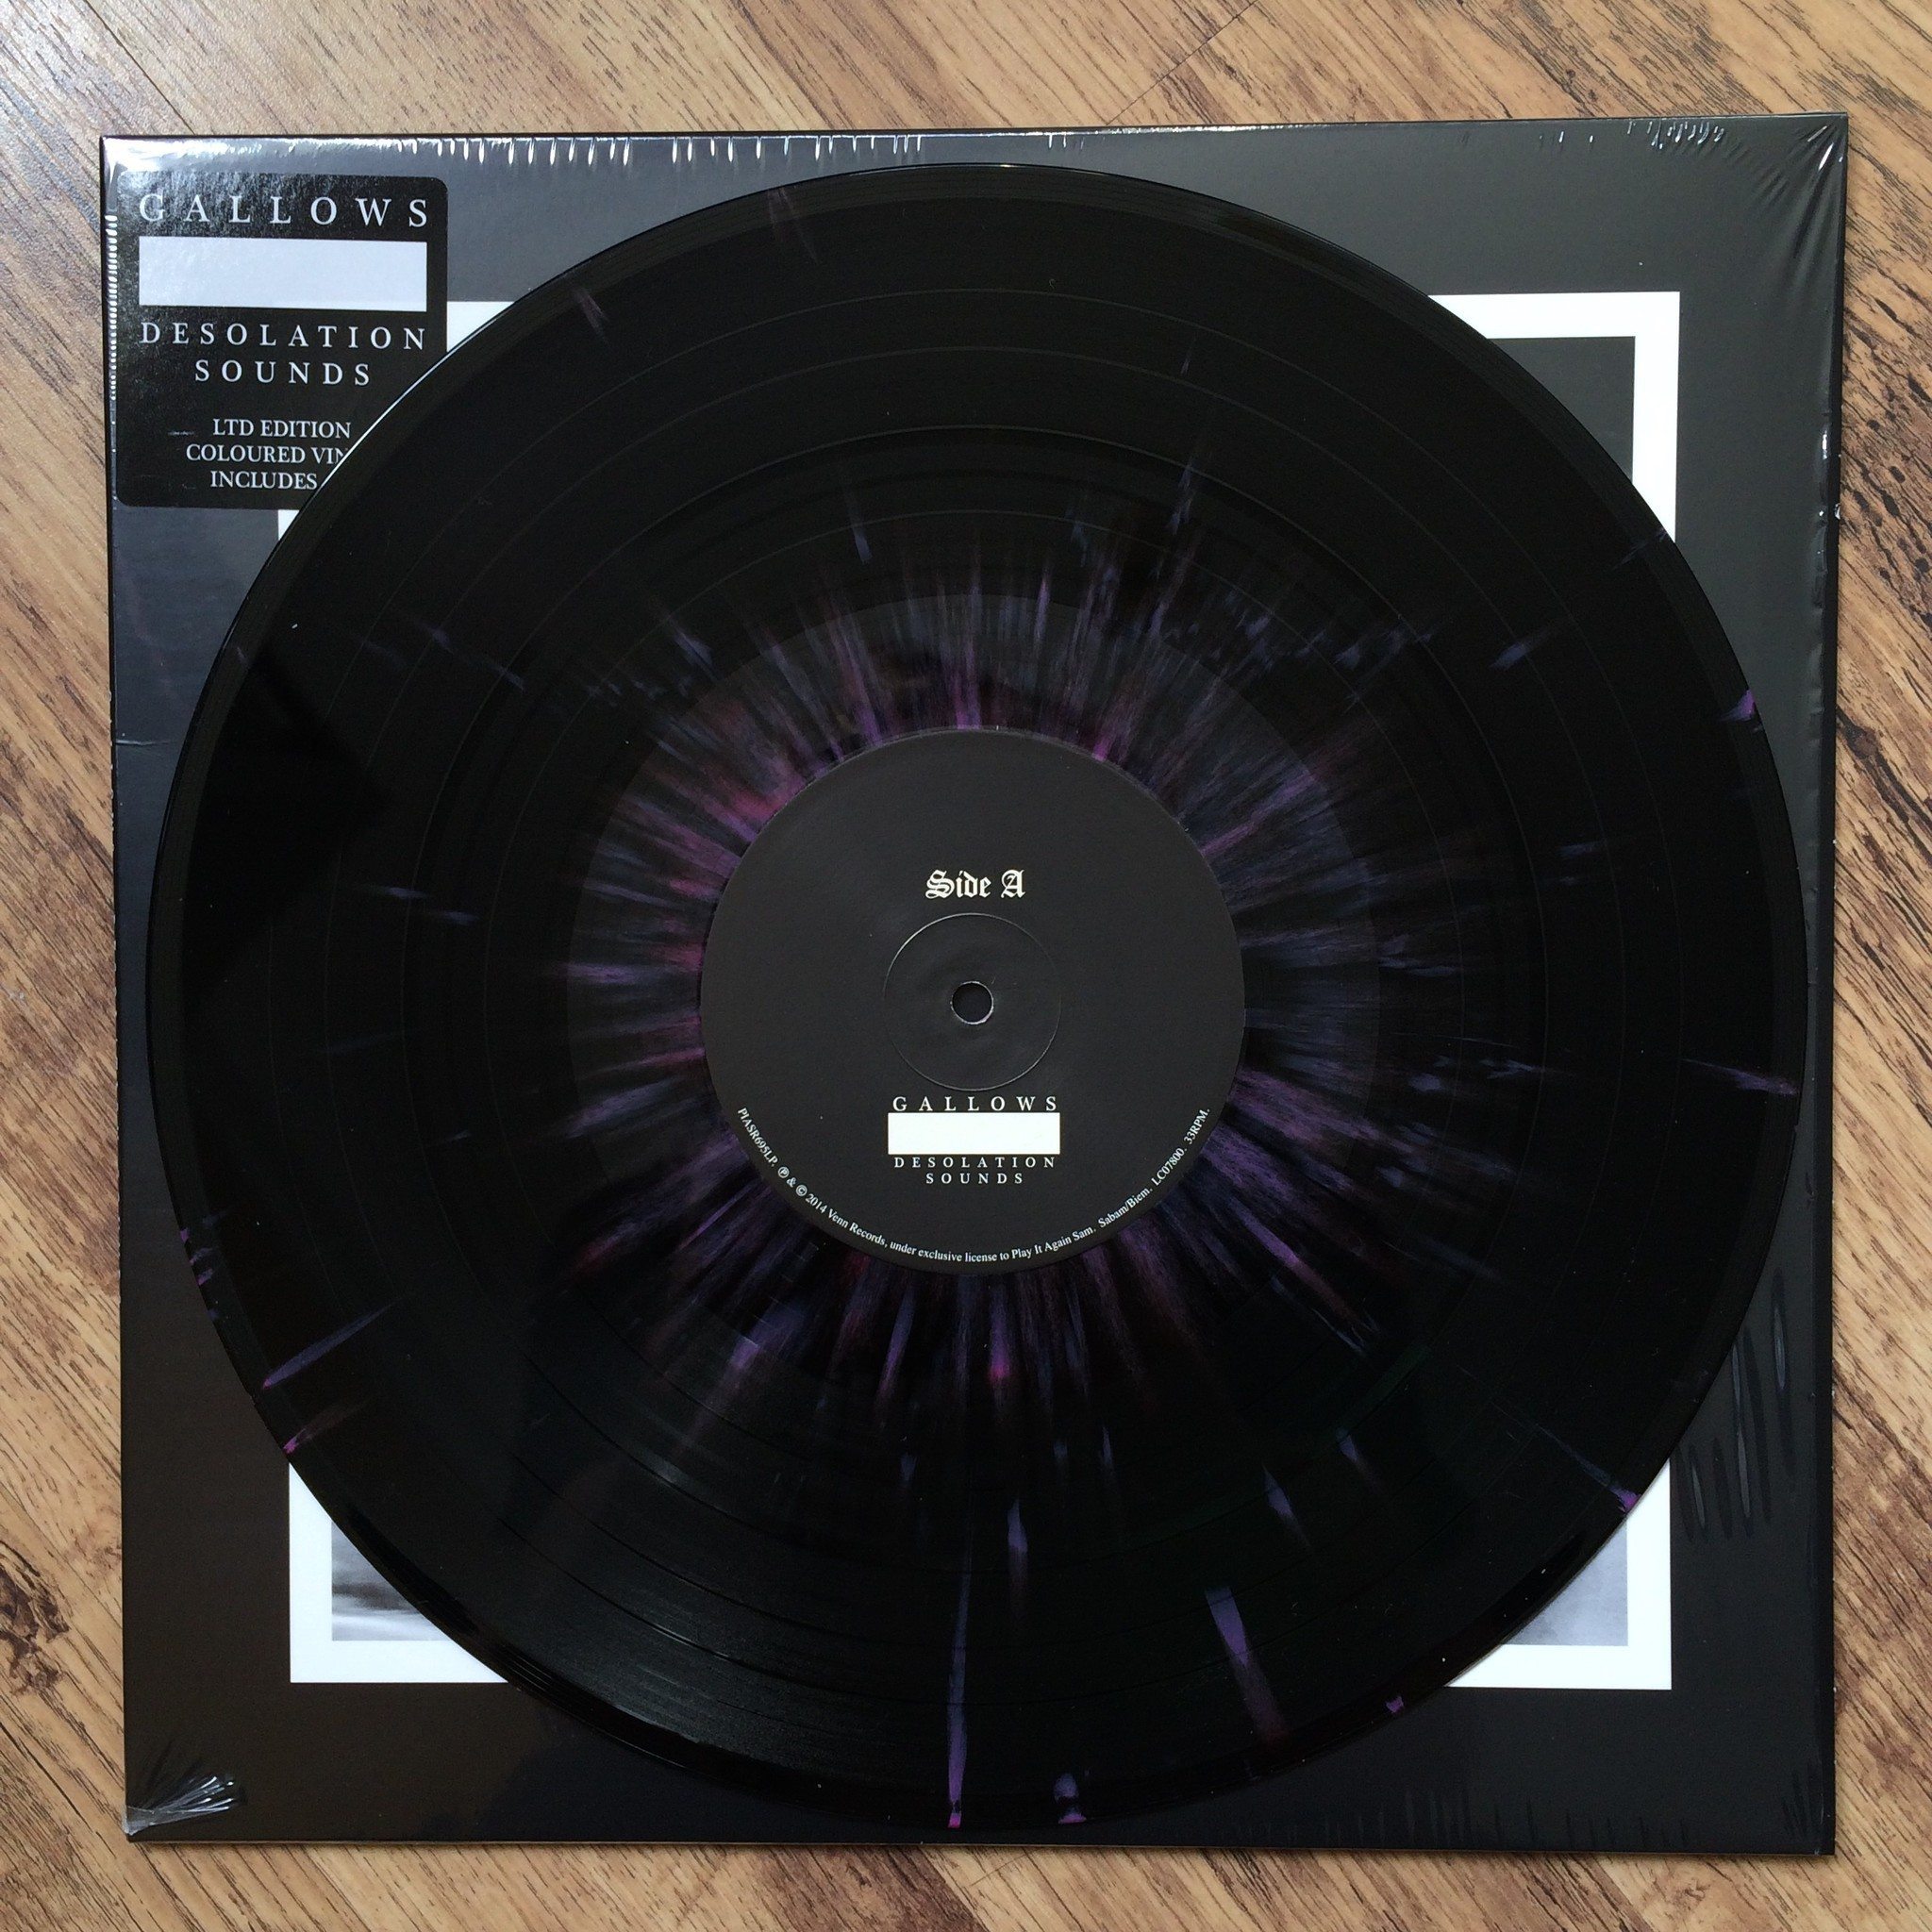 Gallows - Desolation Sounds Vinyl - Purple on black wax - Venn Records